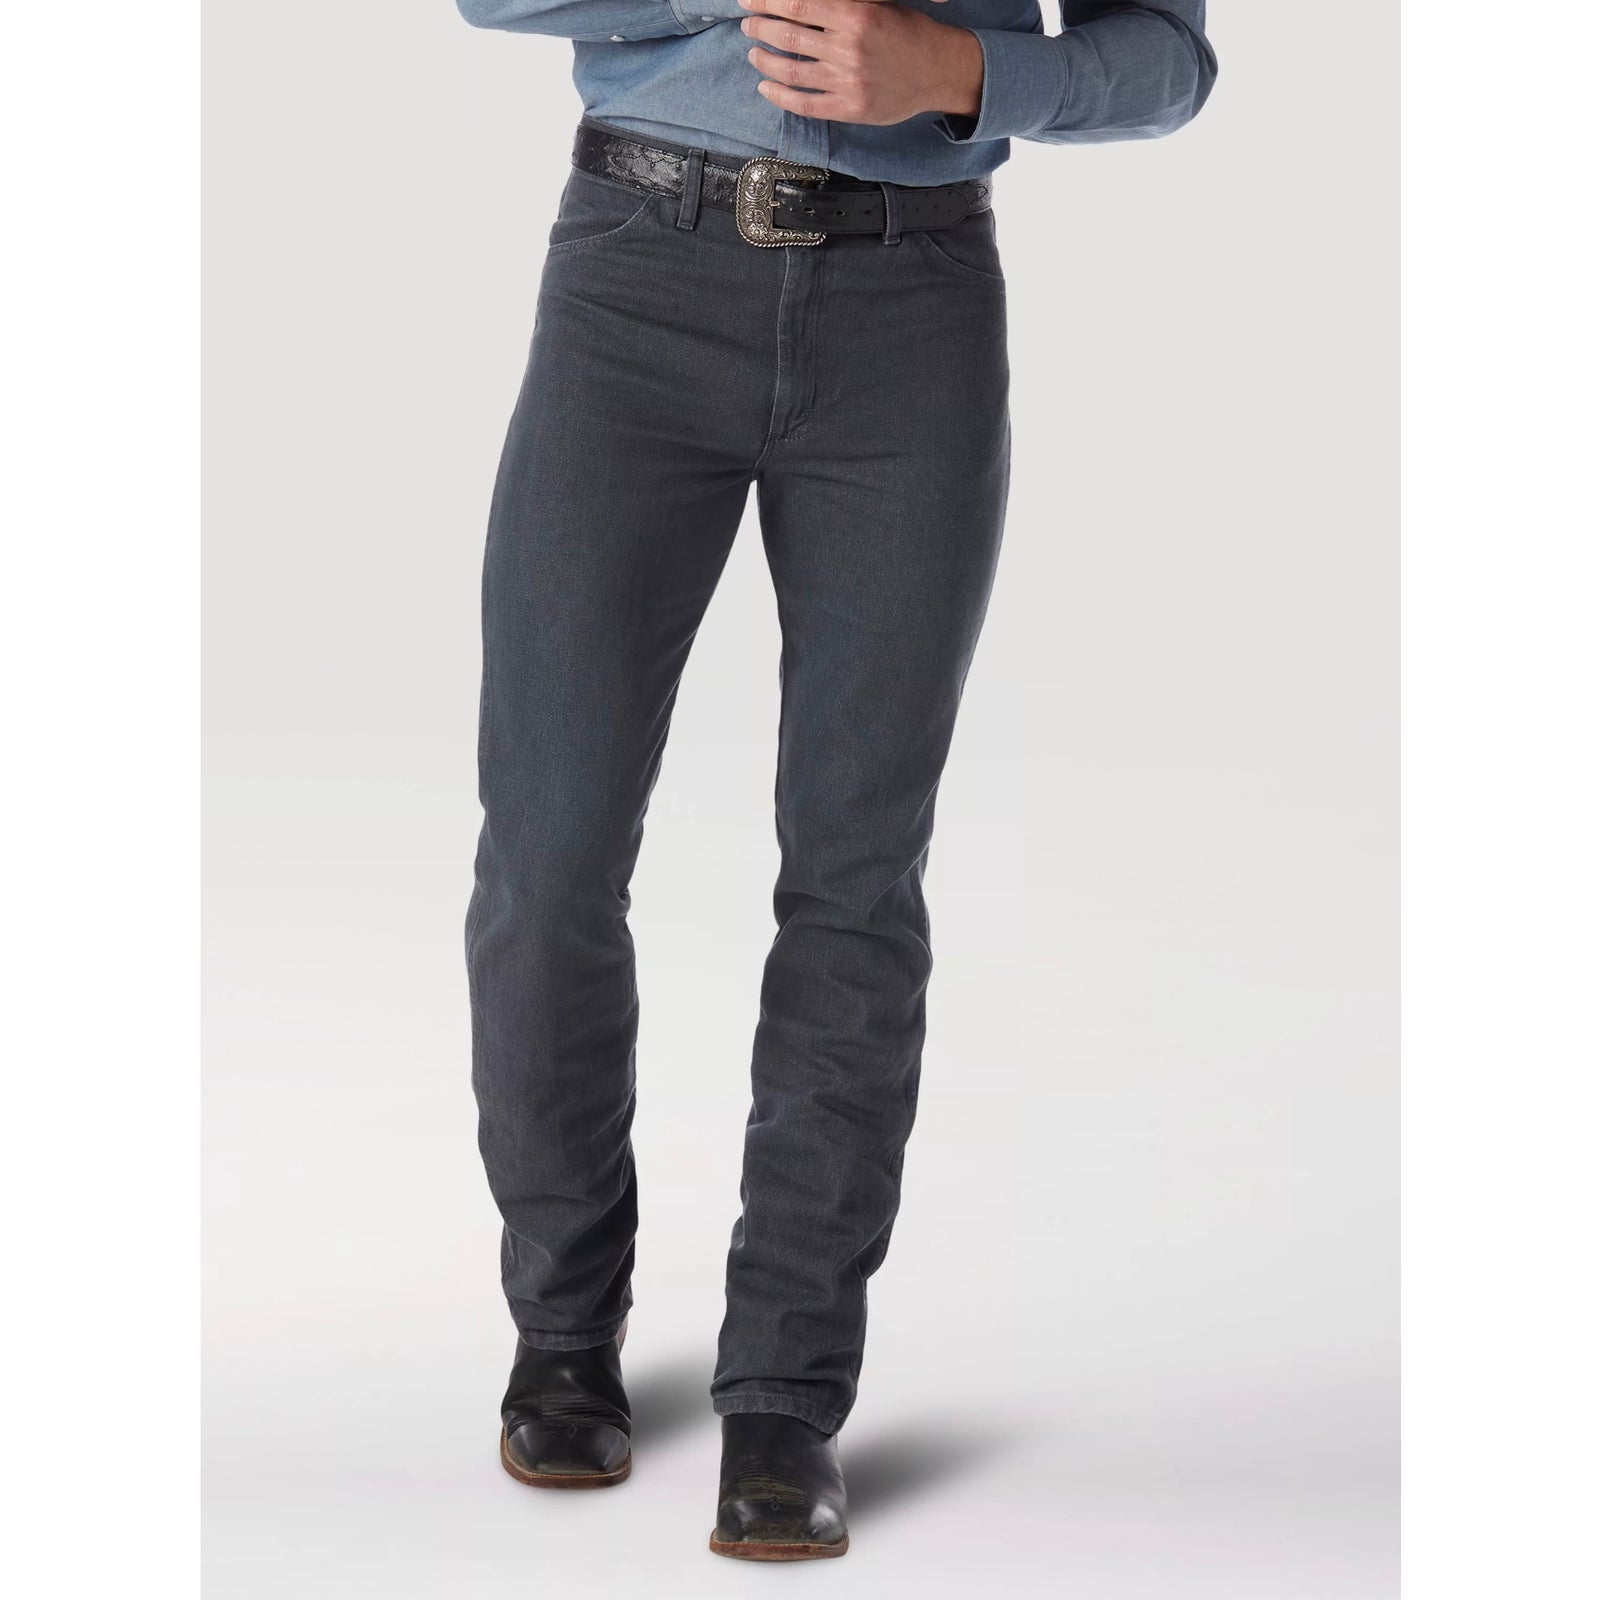 Jeans Wrangler Corte Vaquero Slim Fit Charcoal Gray Caballero